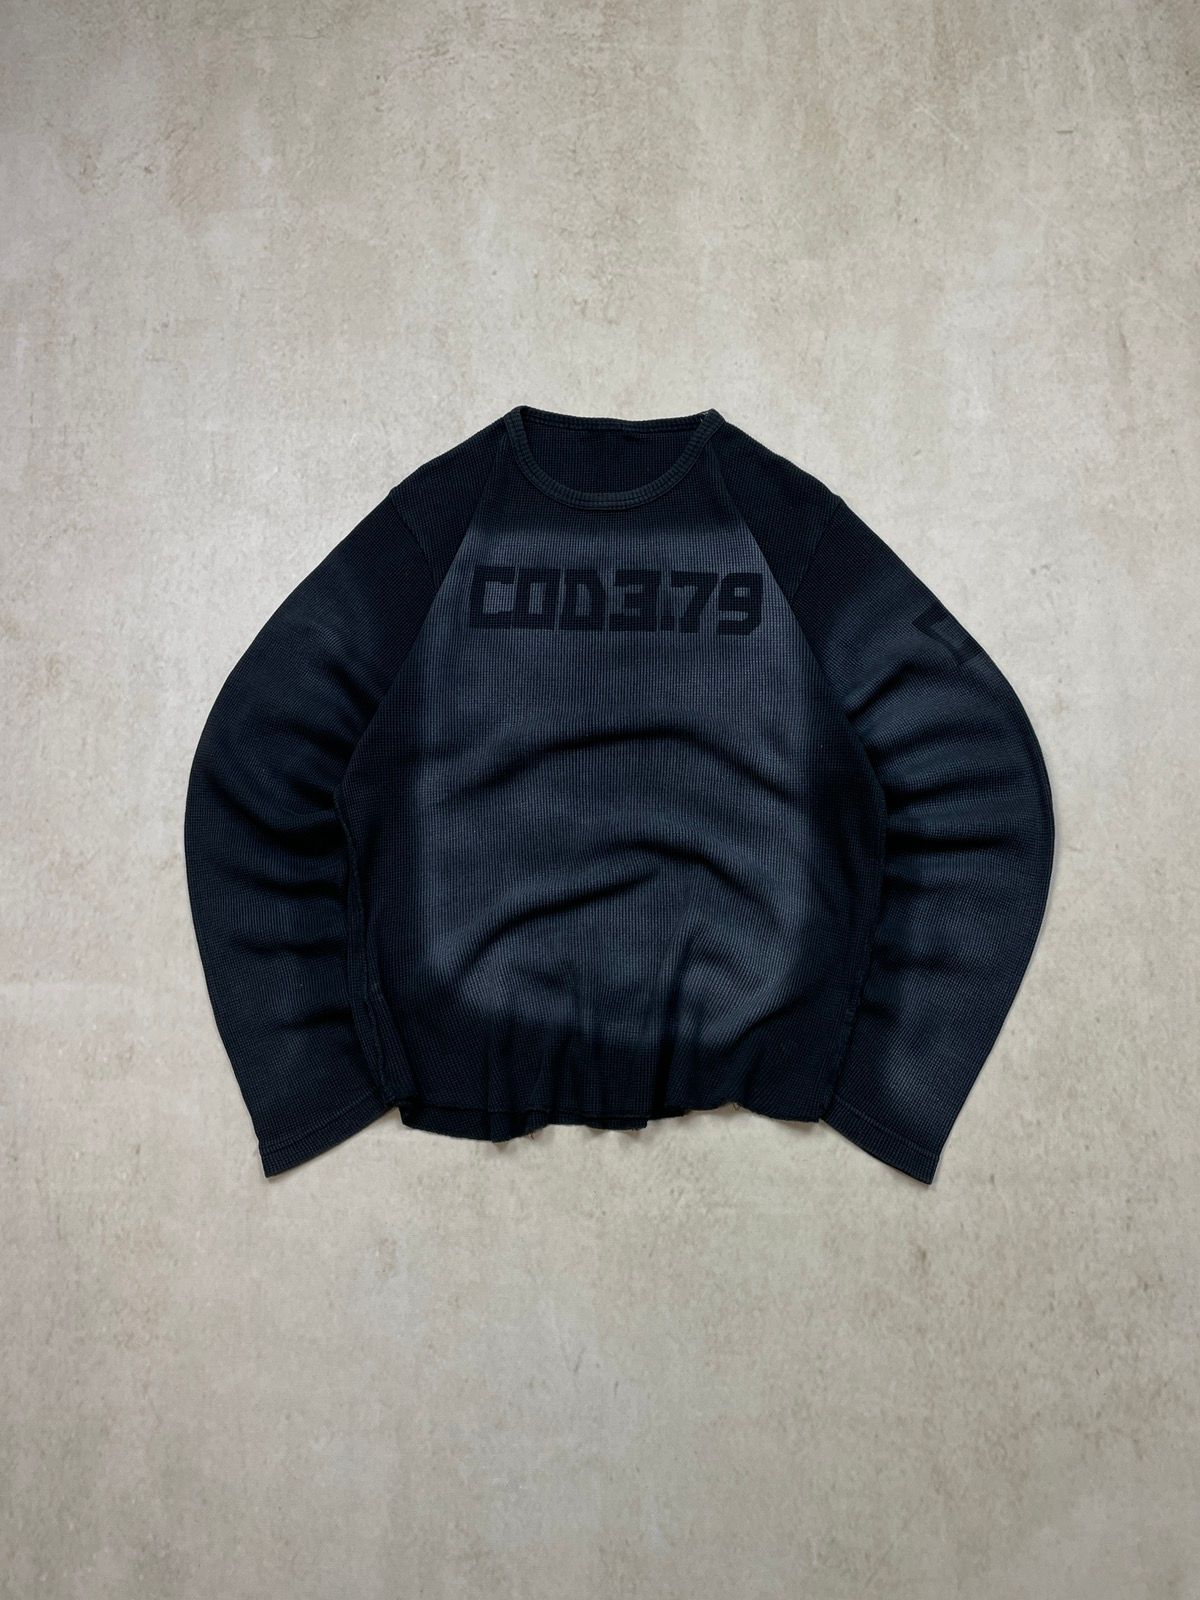 Pre-owned Archival Clothing X Avant Garde Crazy Vintage Diesel Style Washed Black Sweater/sweatshirt (size Medium)